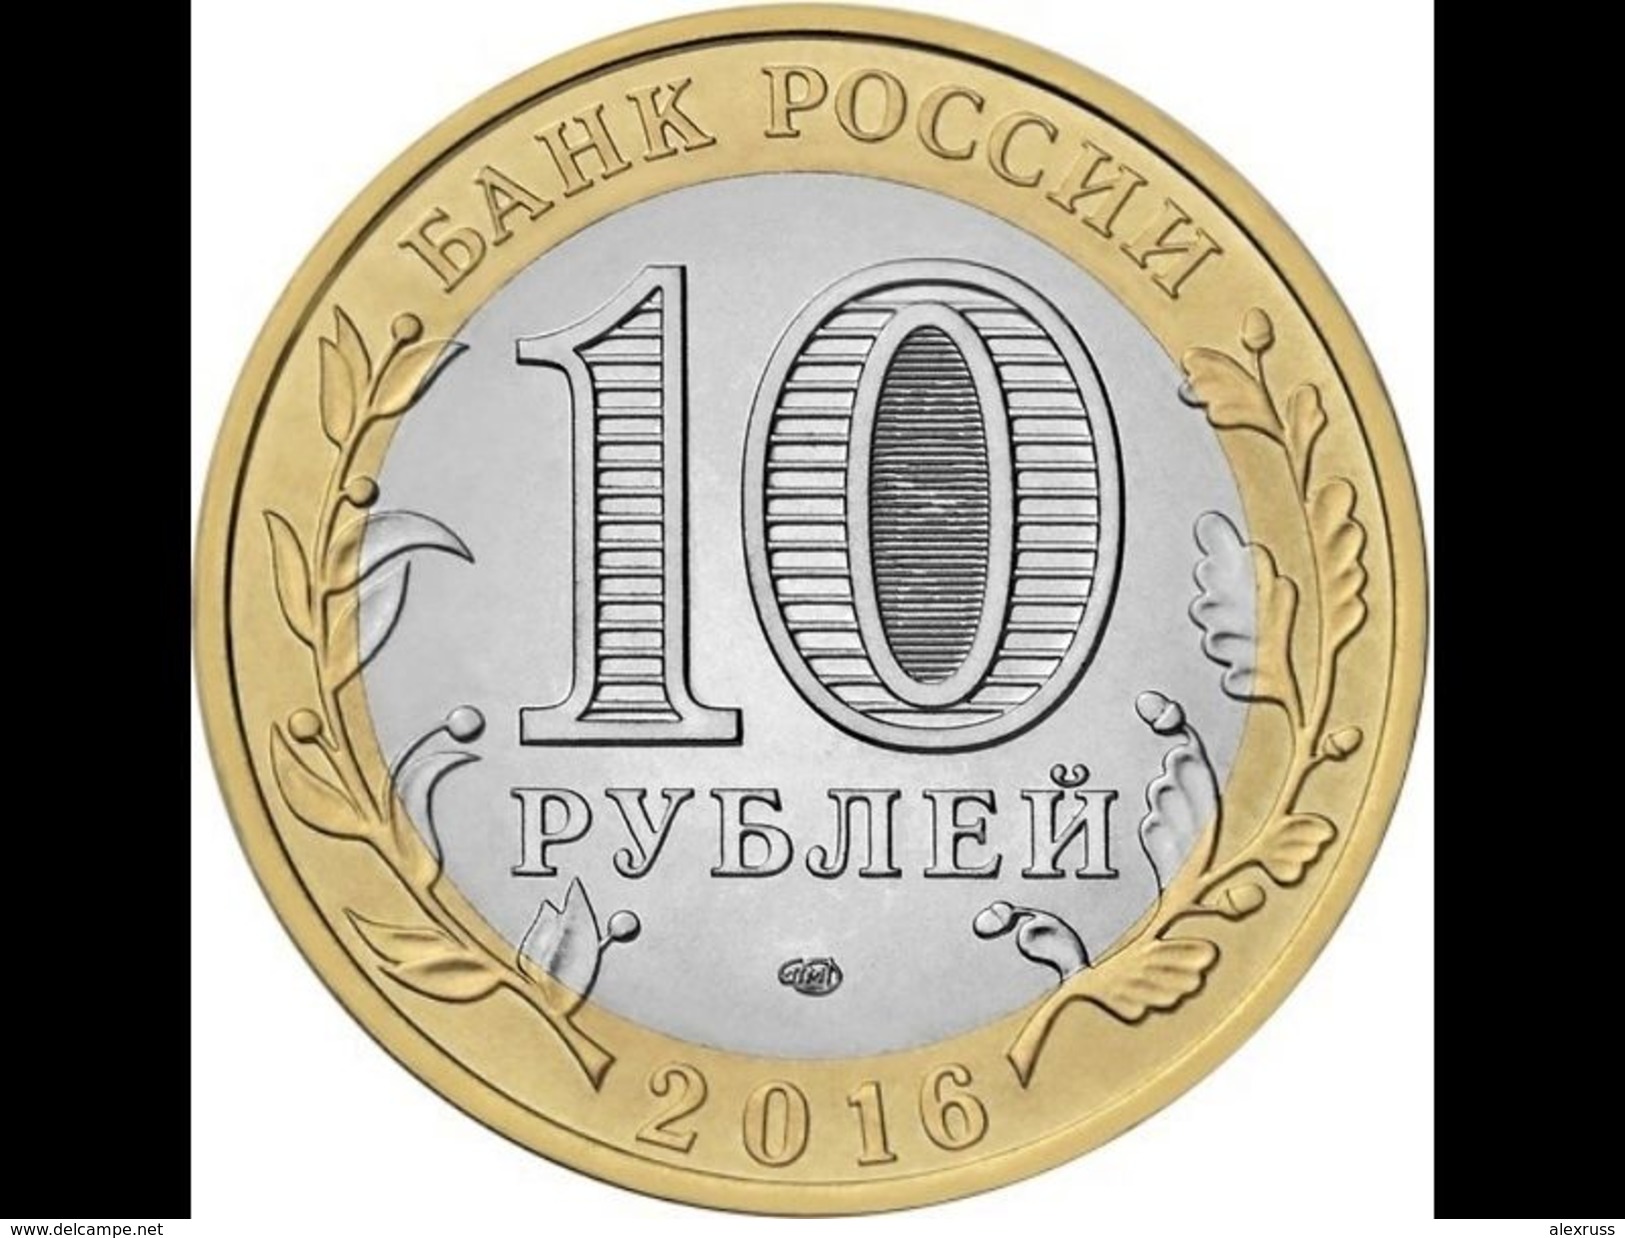 Russia 2016,10 Rub,Amur Region Arms,Series:The Russian Federation,VF UNC - Russia